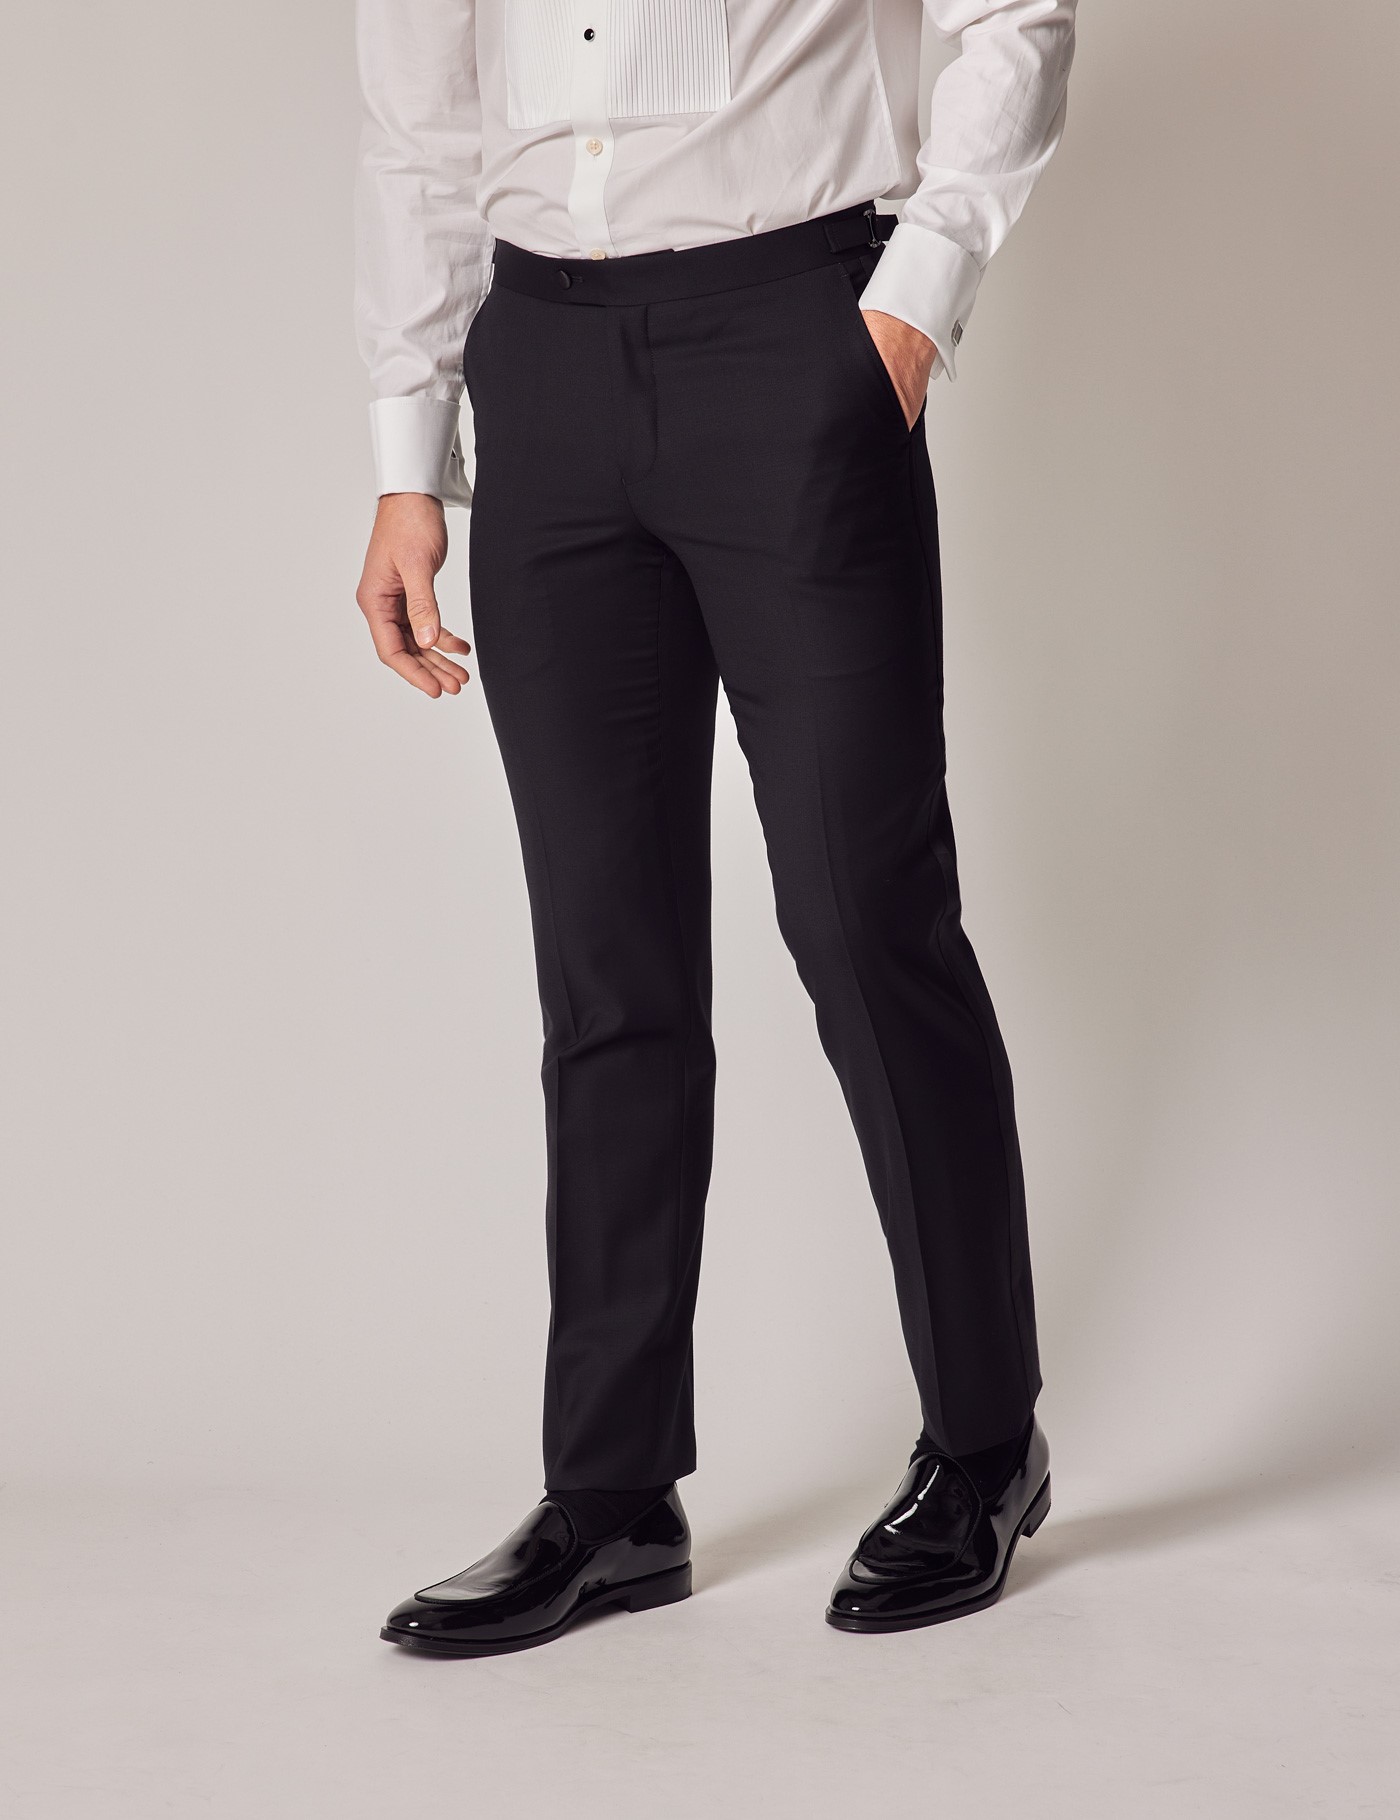 Buy Men's Black Trousers Trousers Online | Next UK